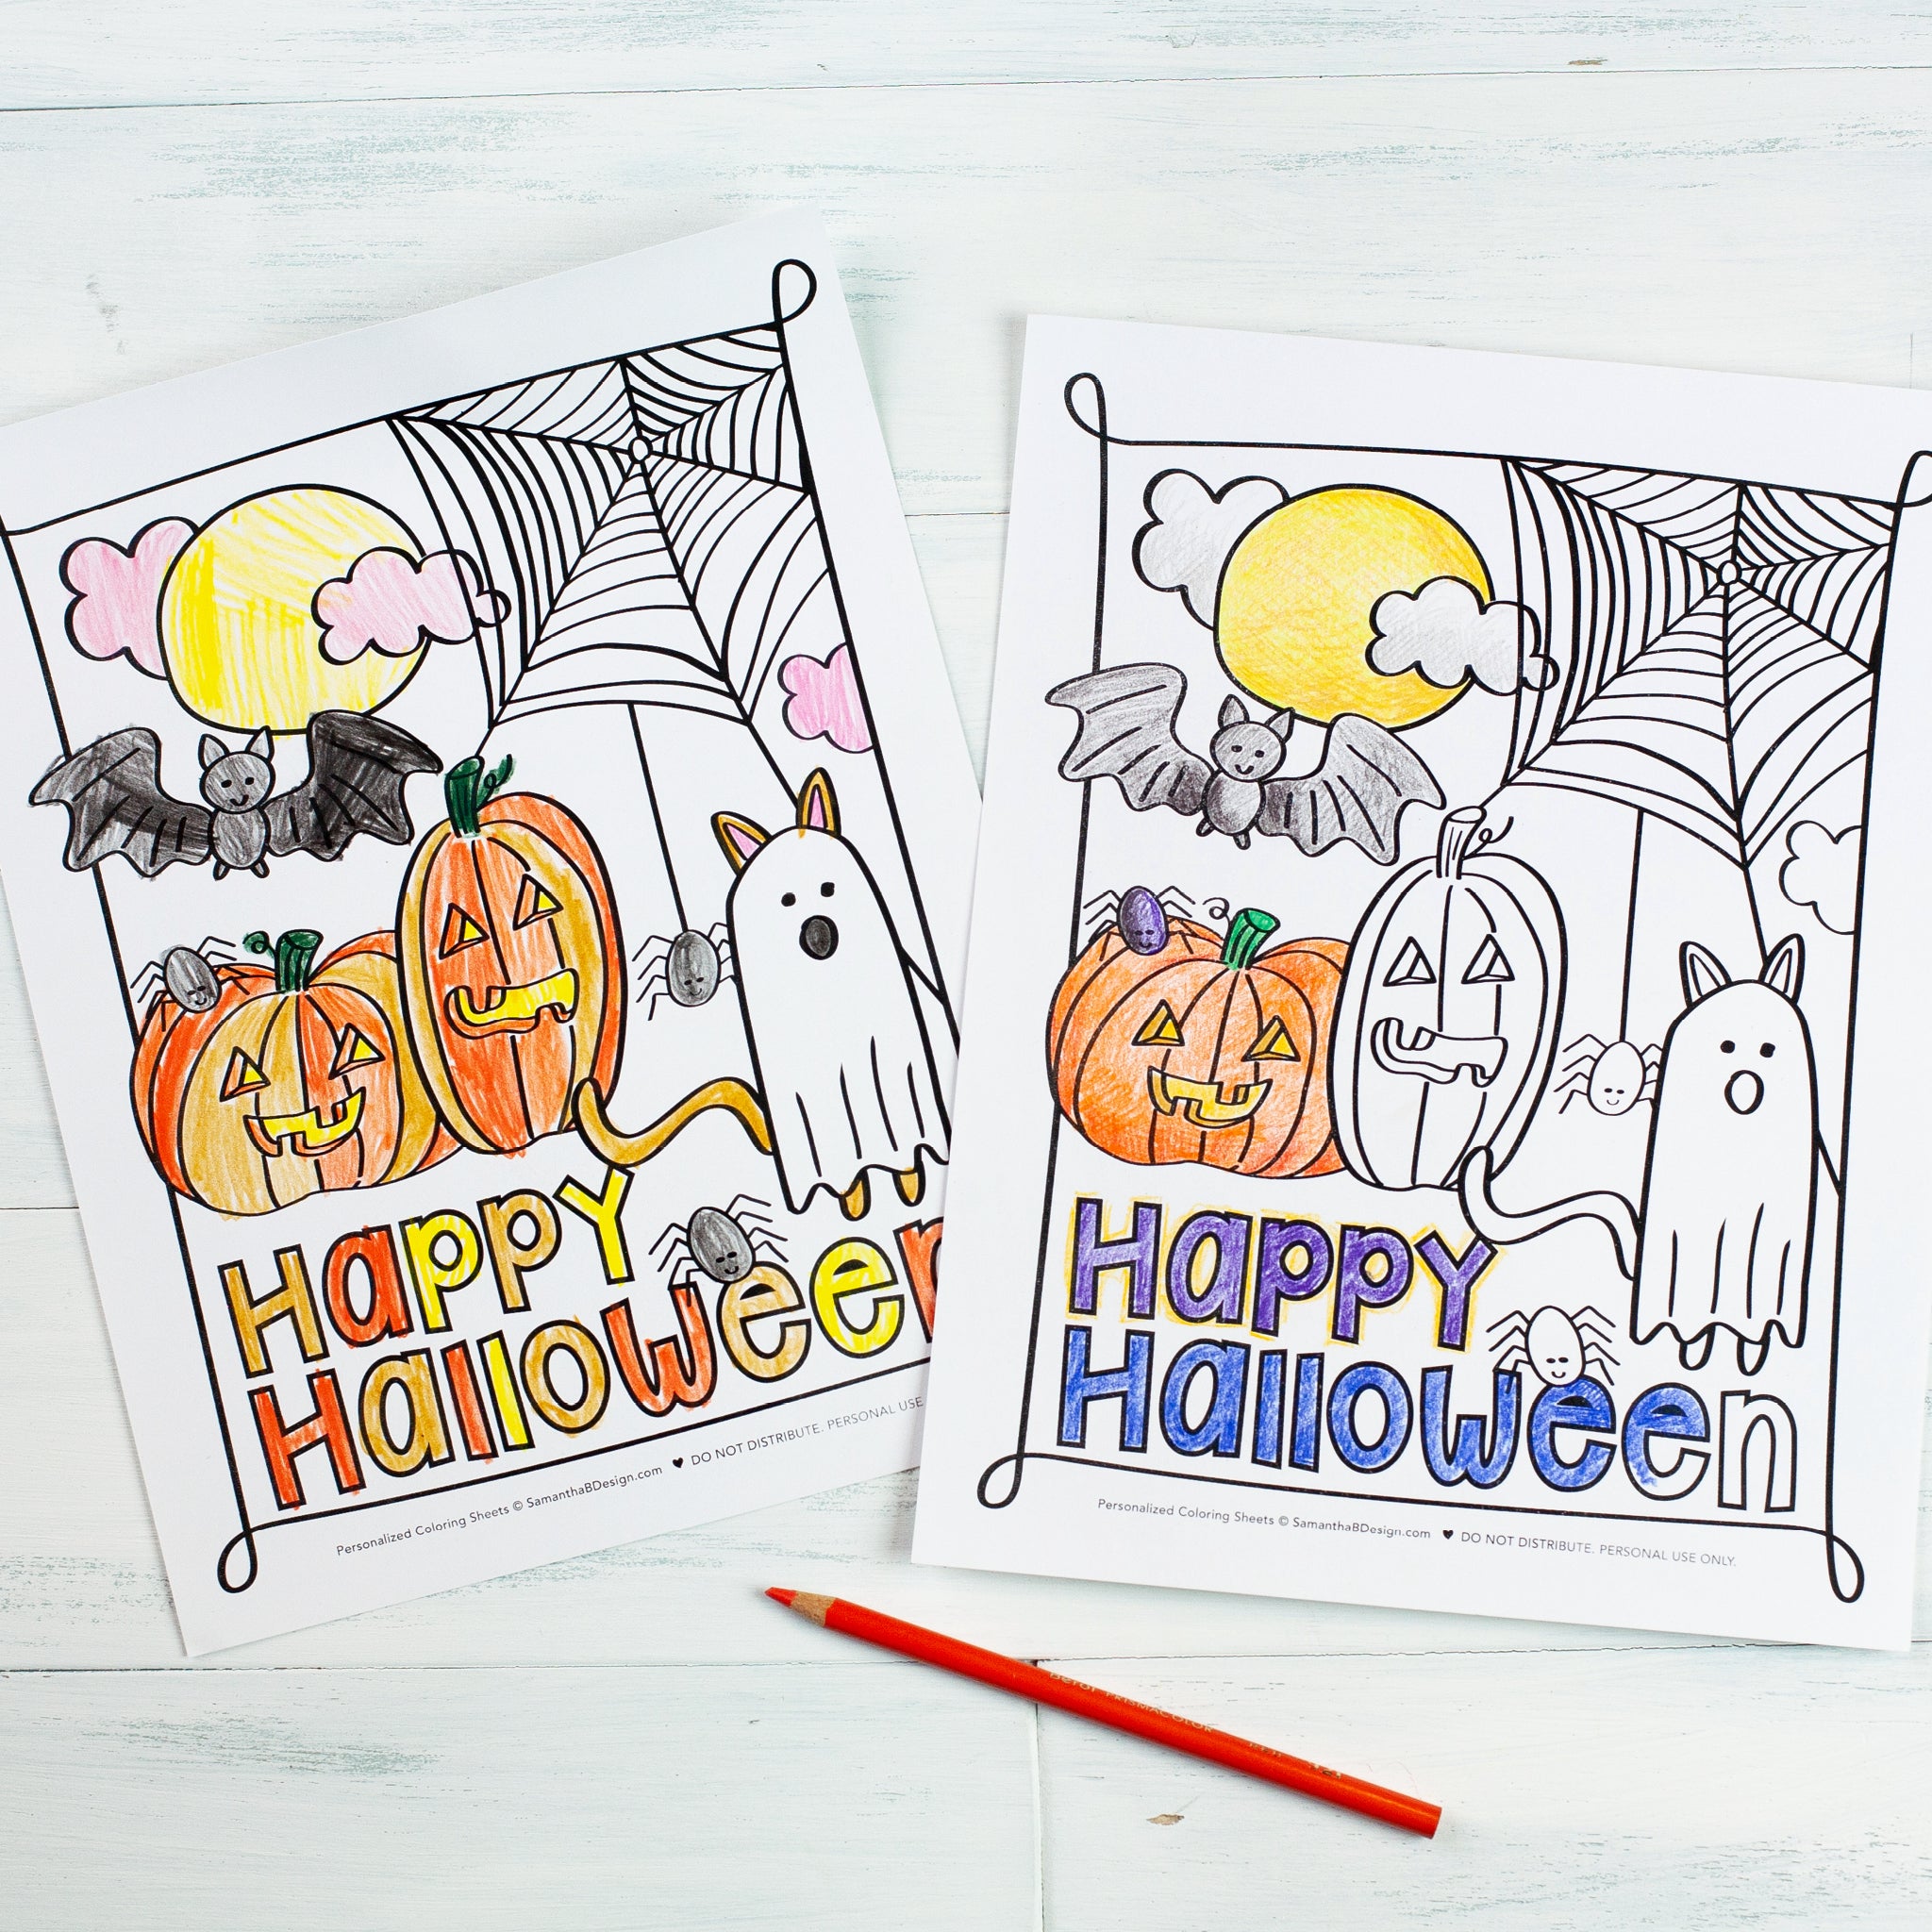 Halloween Coloring Bundle for Kids Ages 8-12, Digital Instant